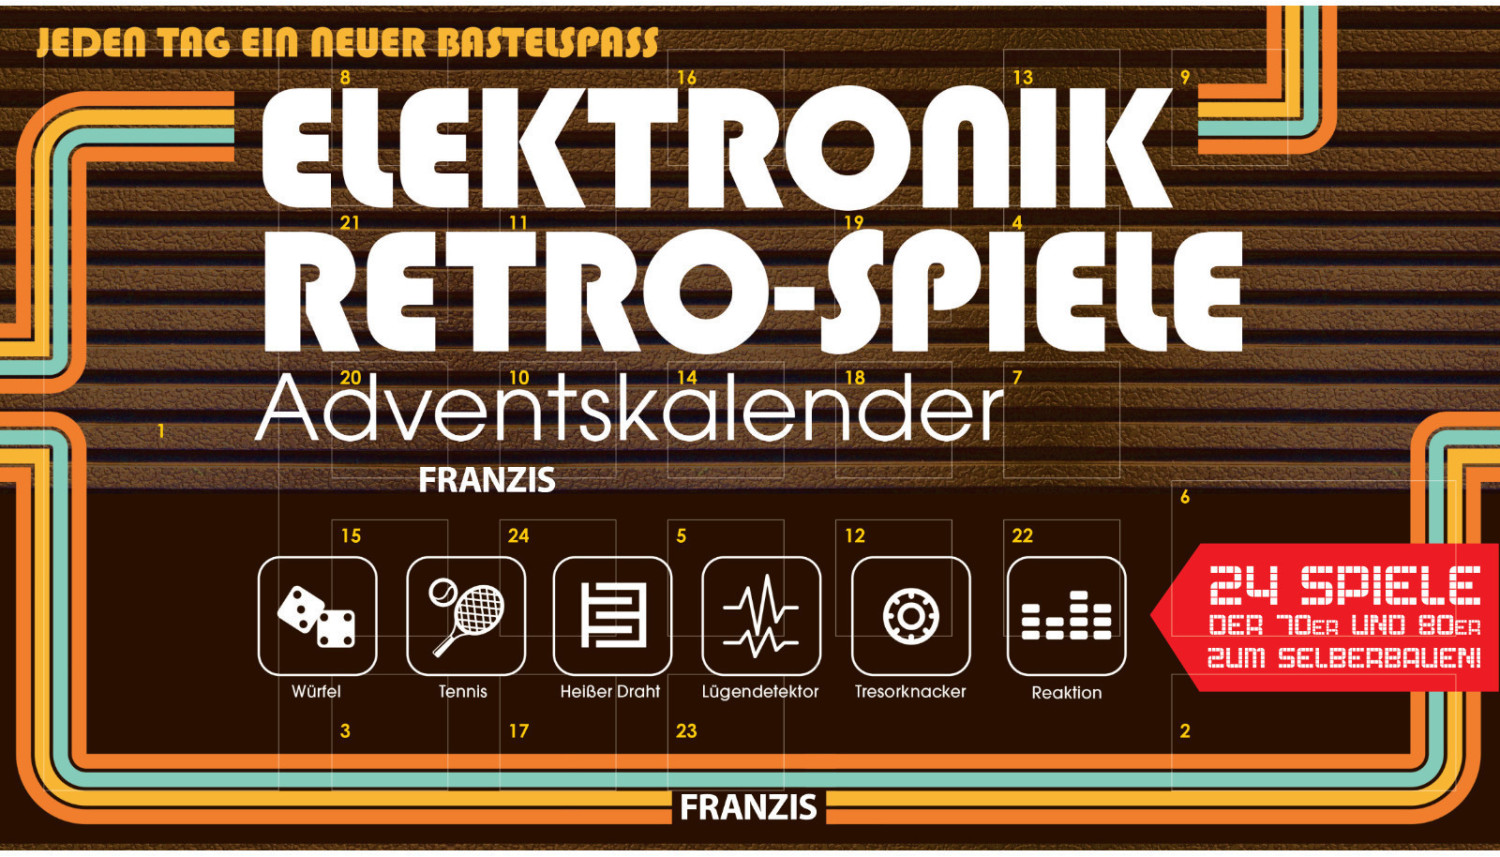 Franzis Elektronik Retro Spiele 2018